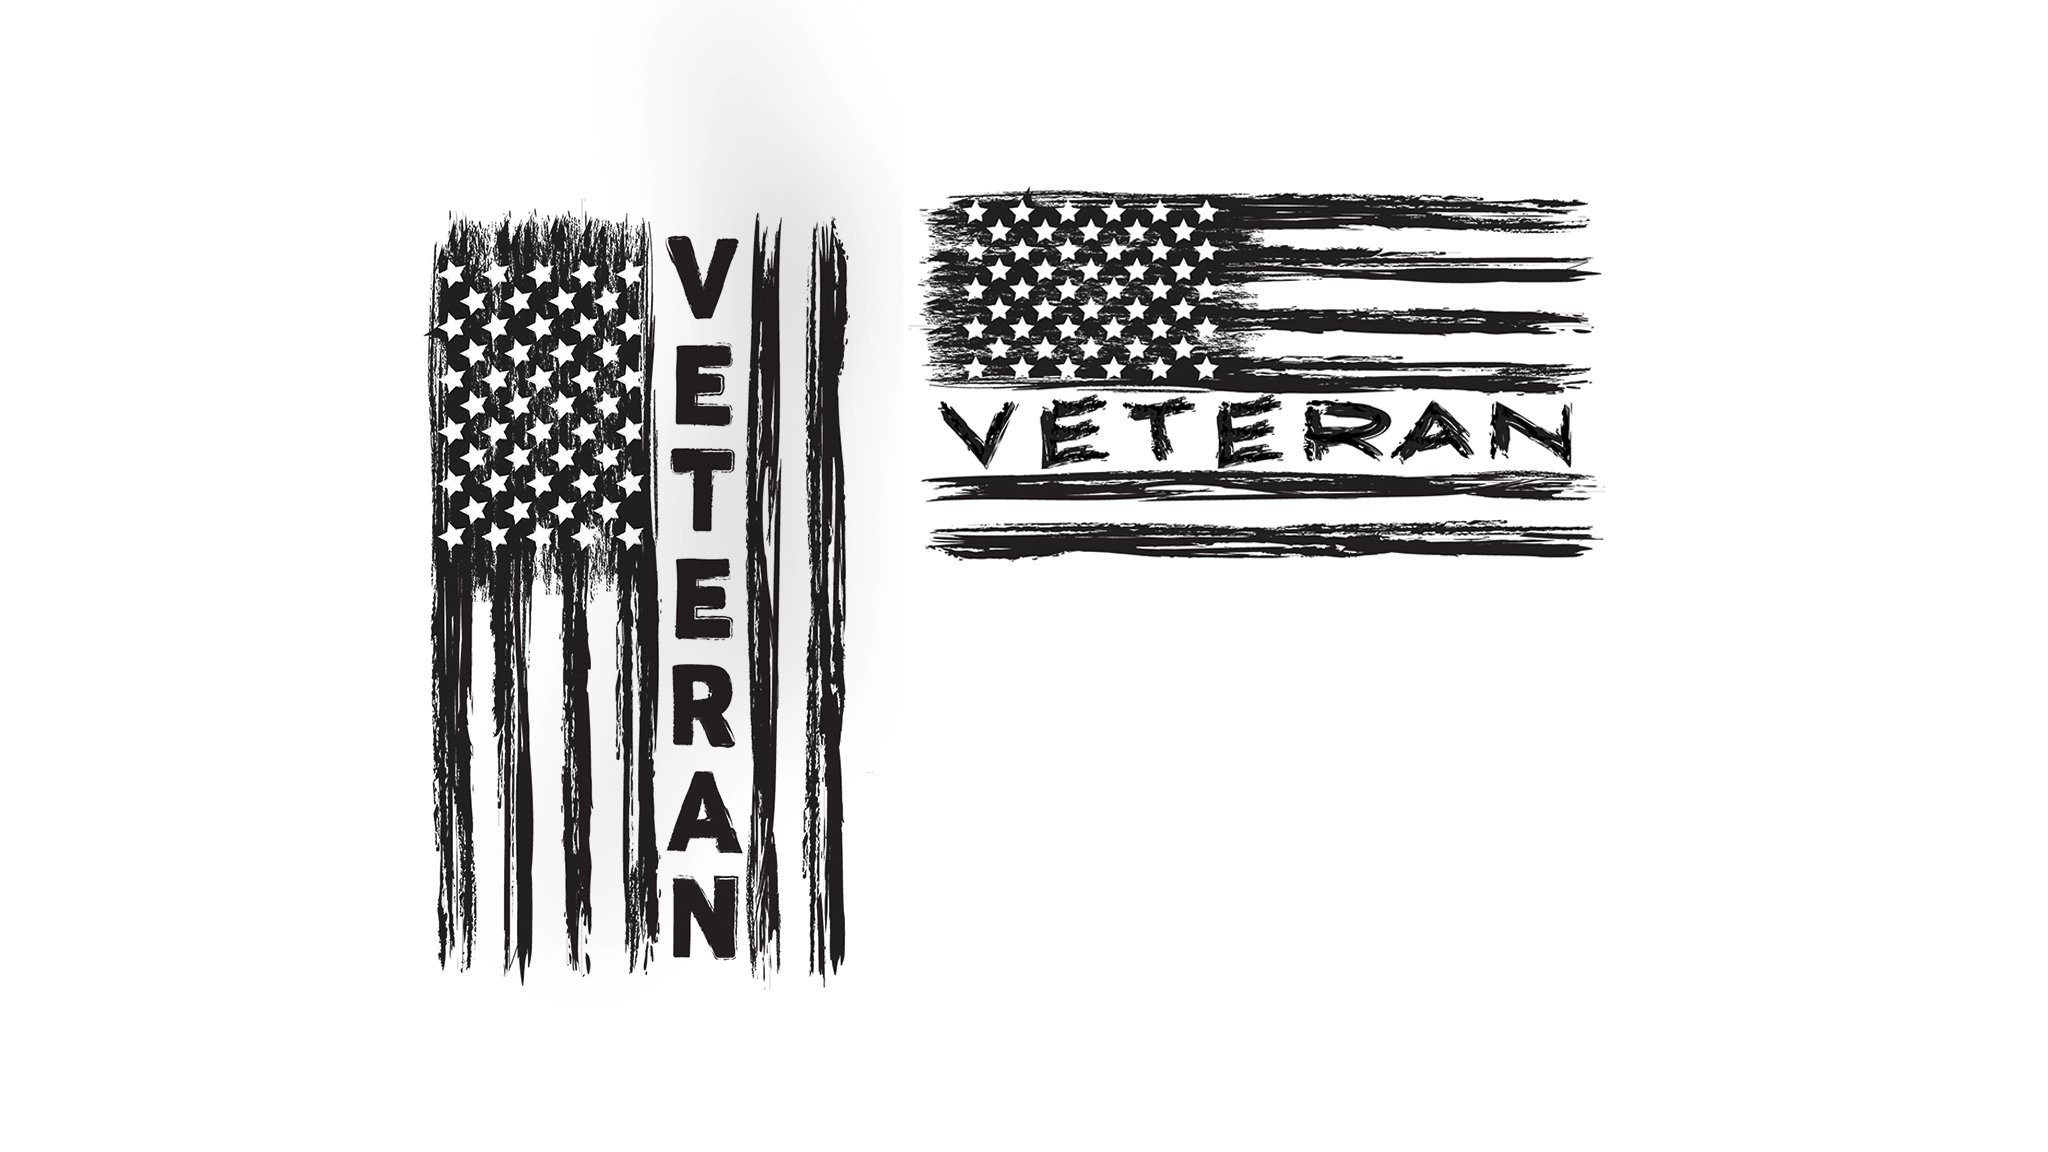 Veteran USA Flags cover image.